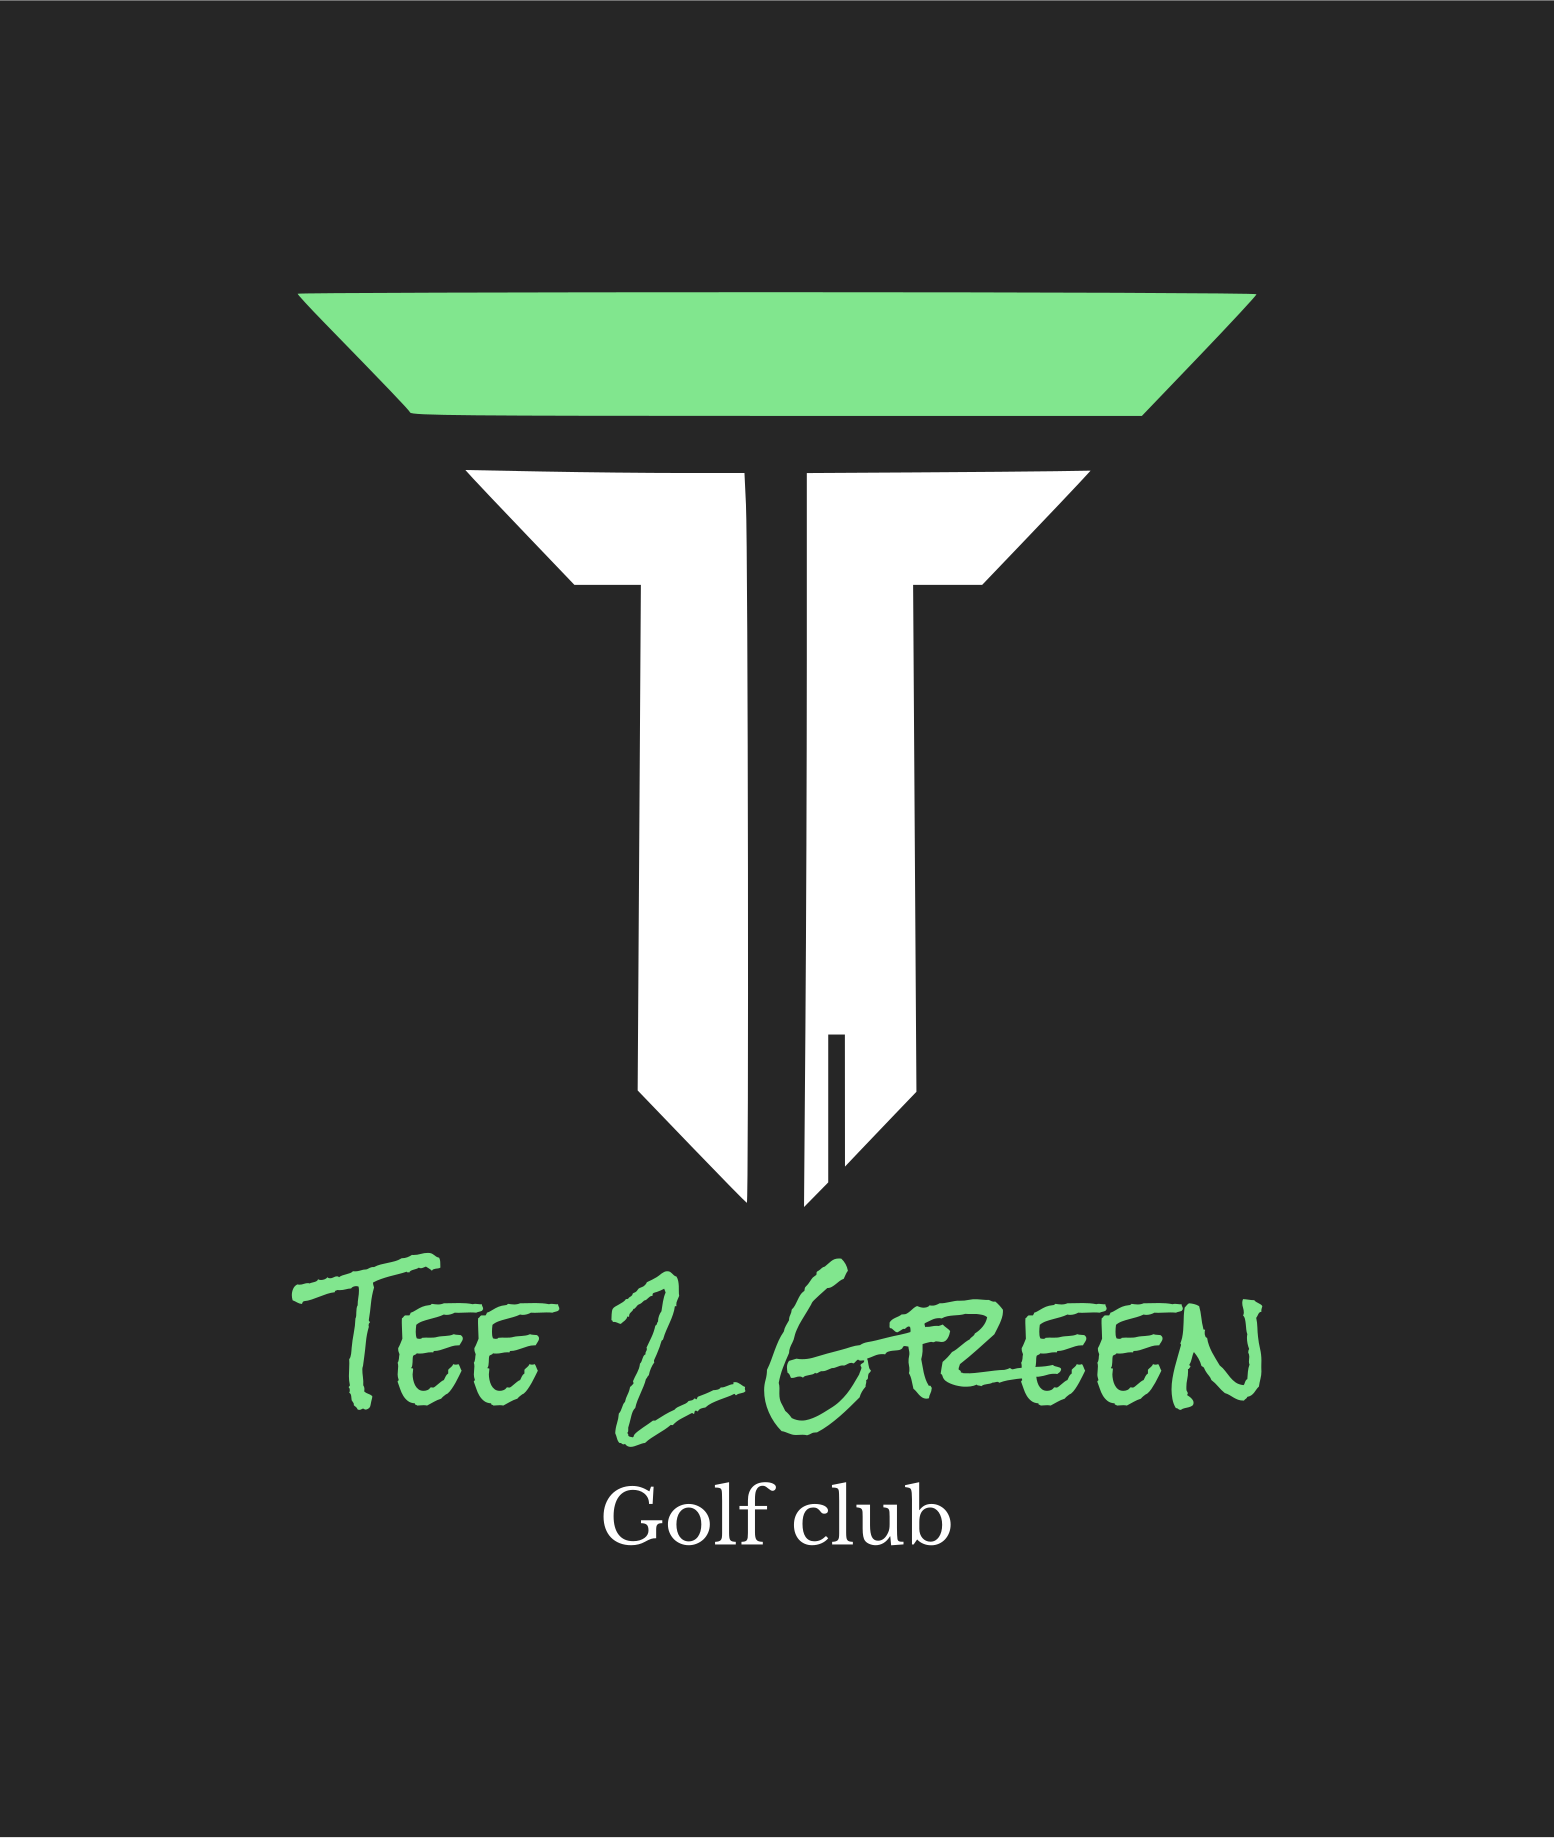 Tee 2 Green Golf Club